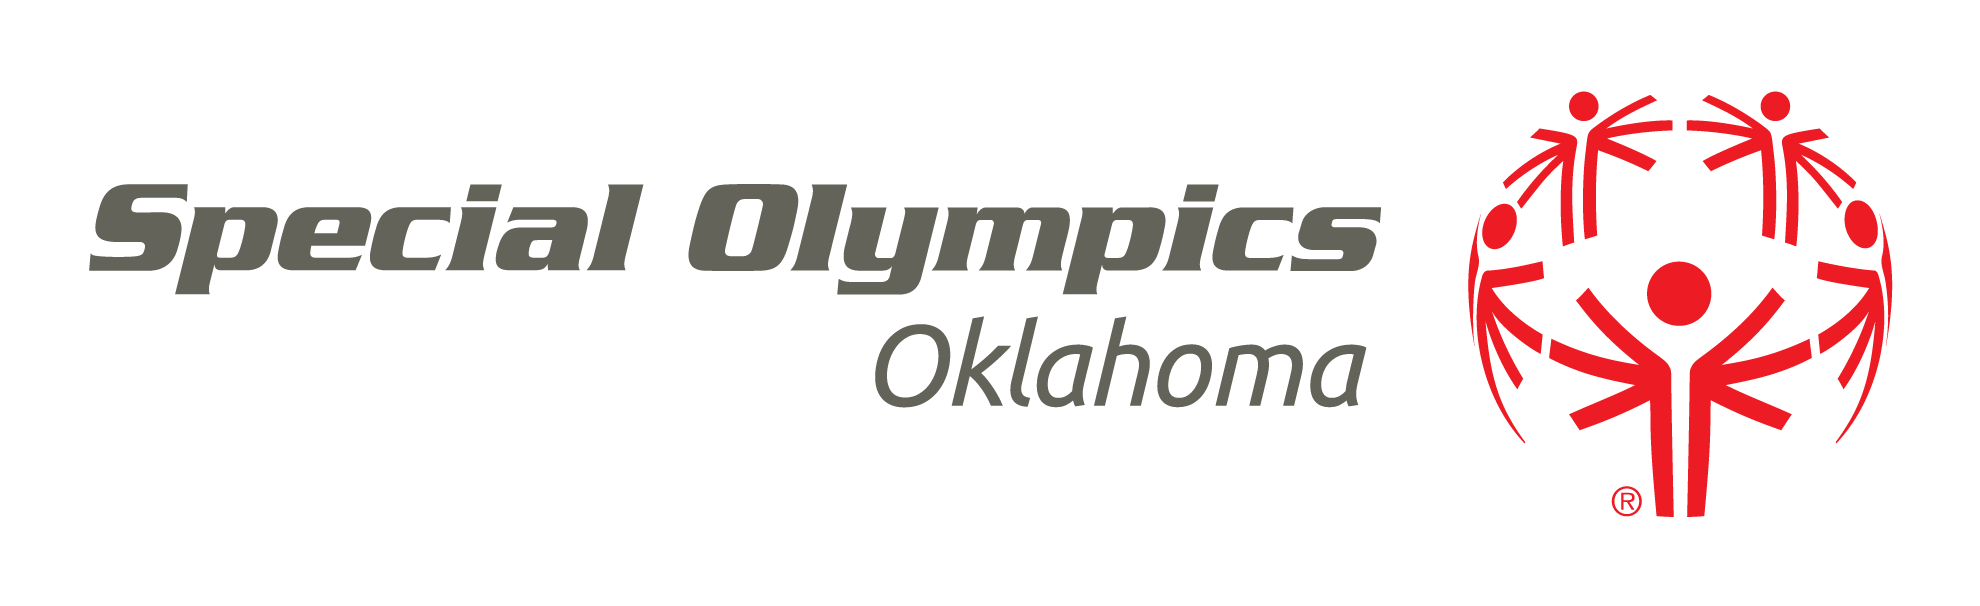 Branding Special Olympics Oklahoma